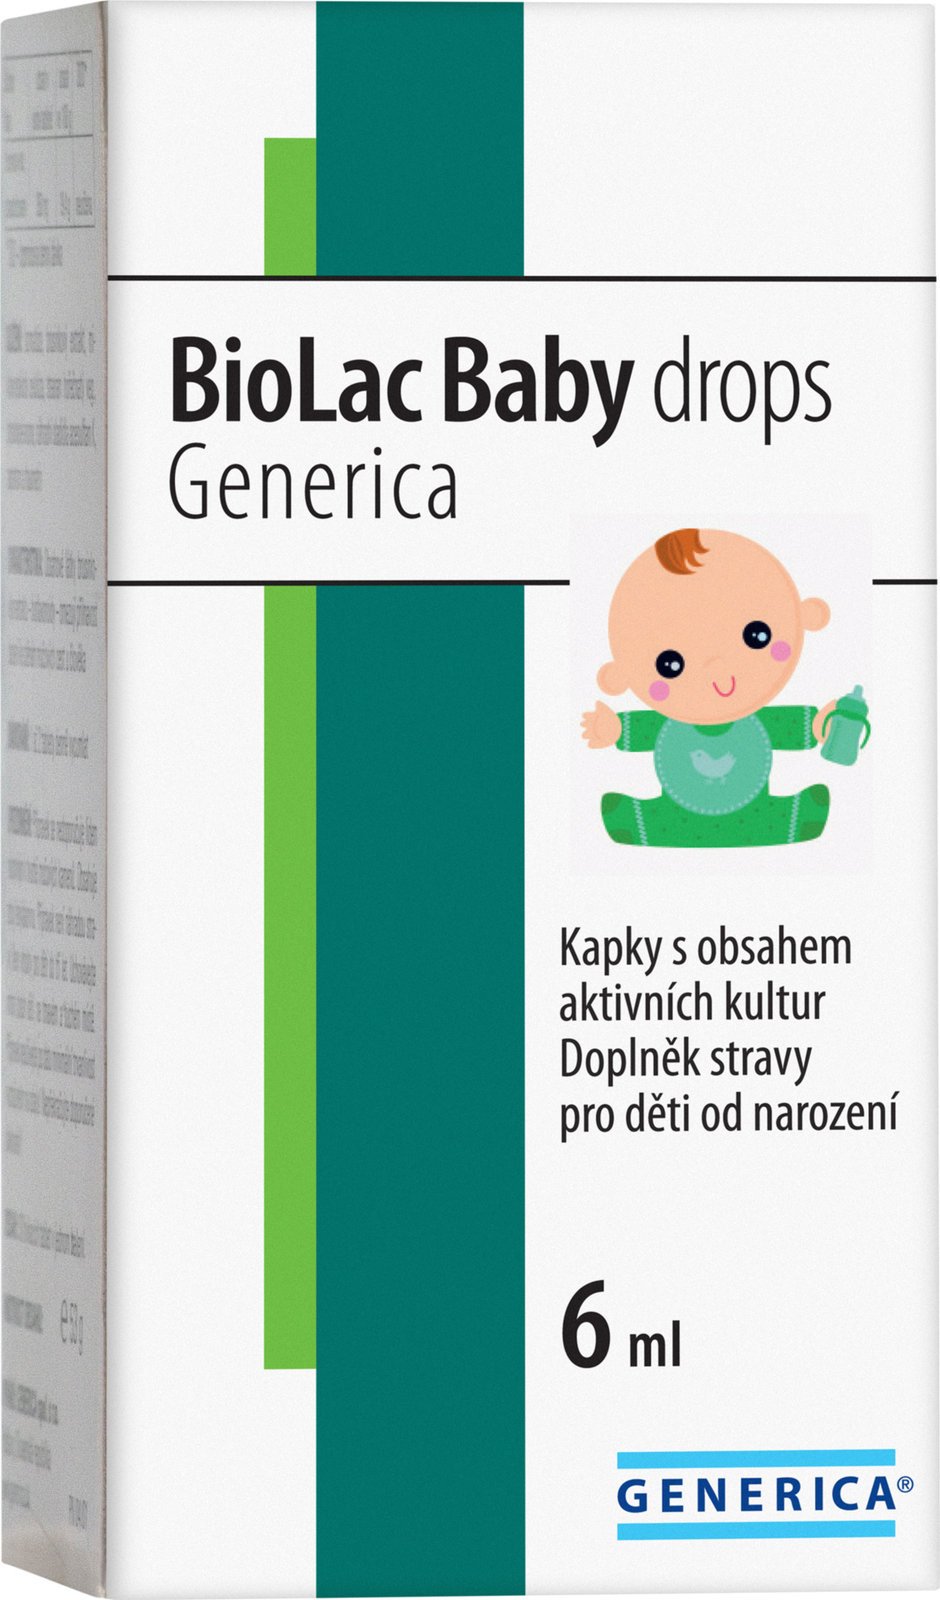 BioLac Baby drops